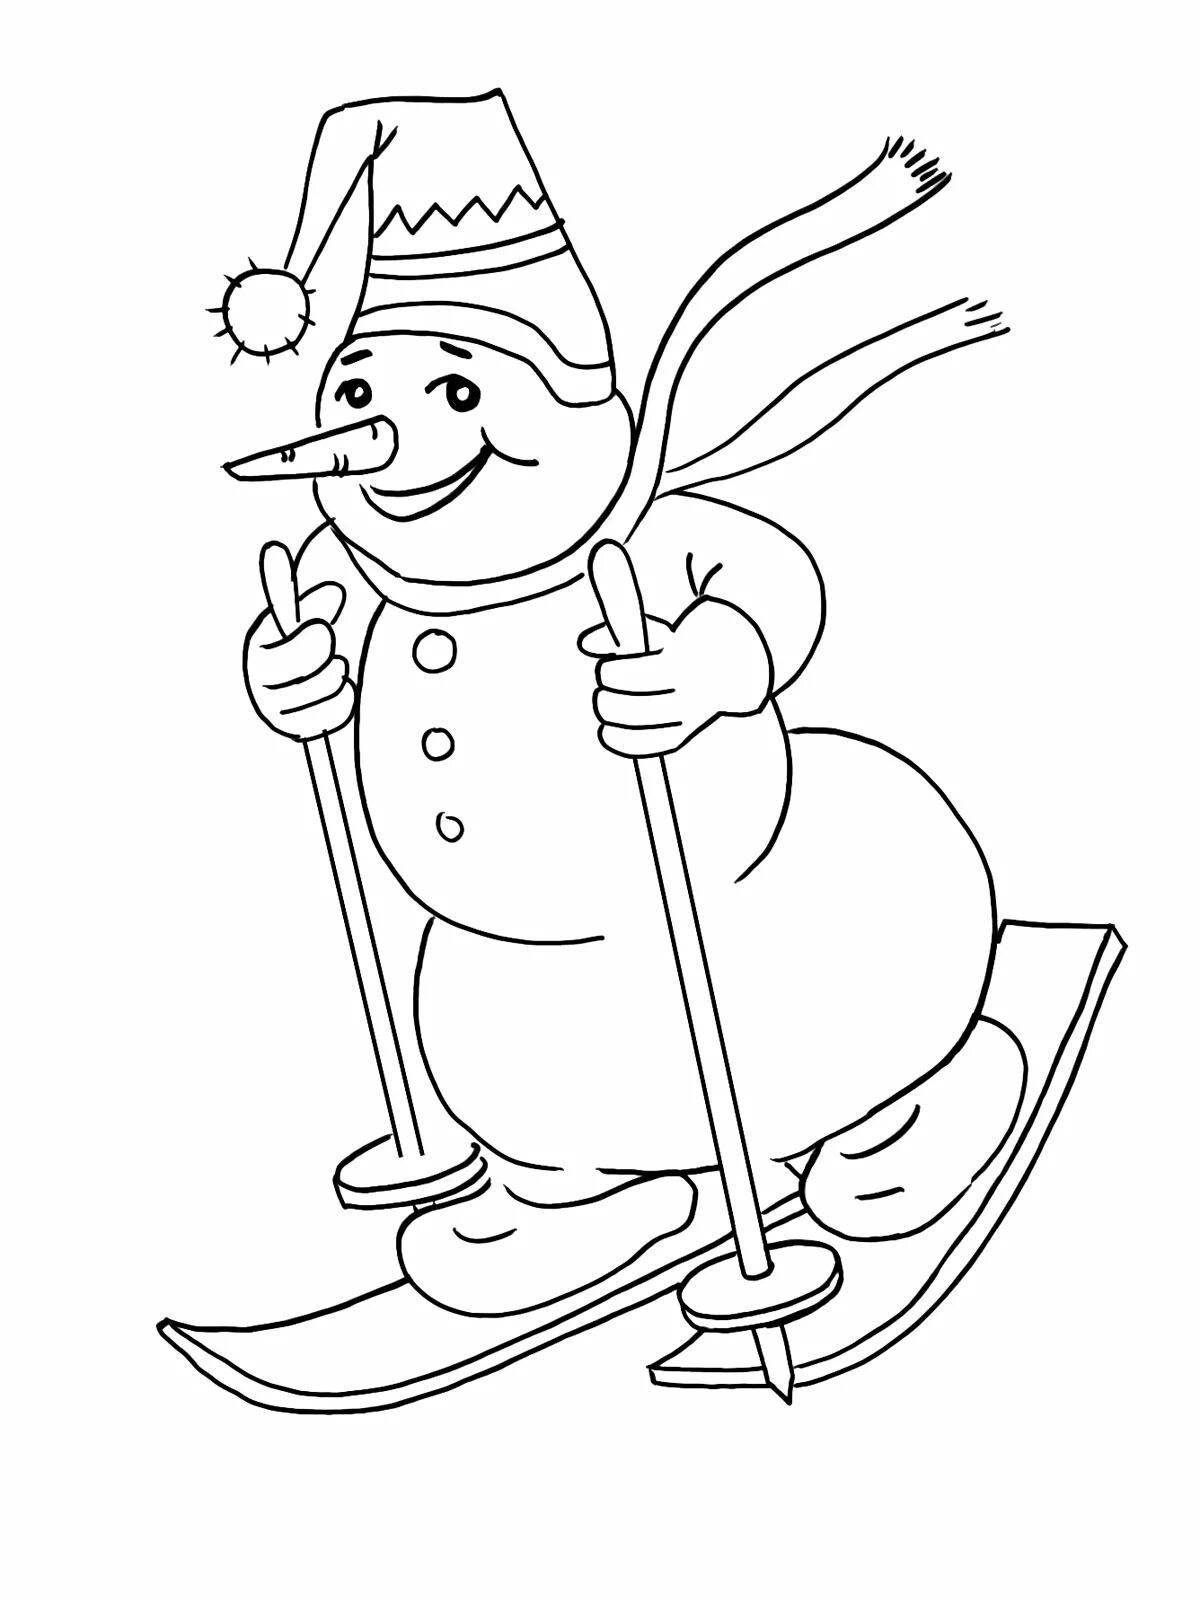 Snowman on skis #19